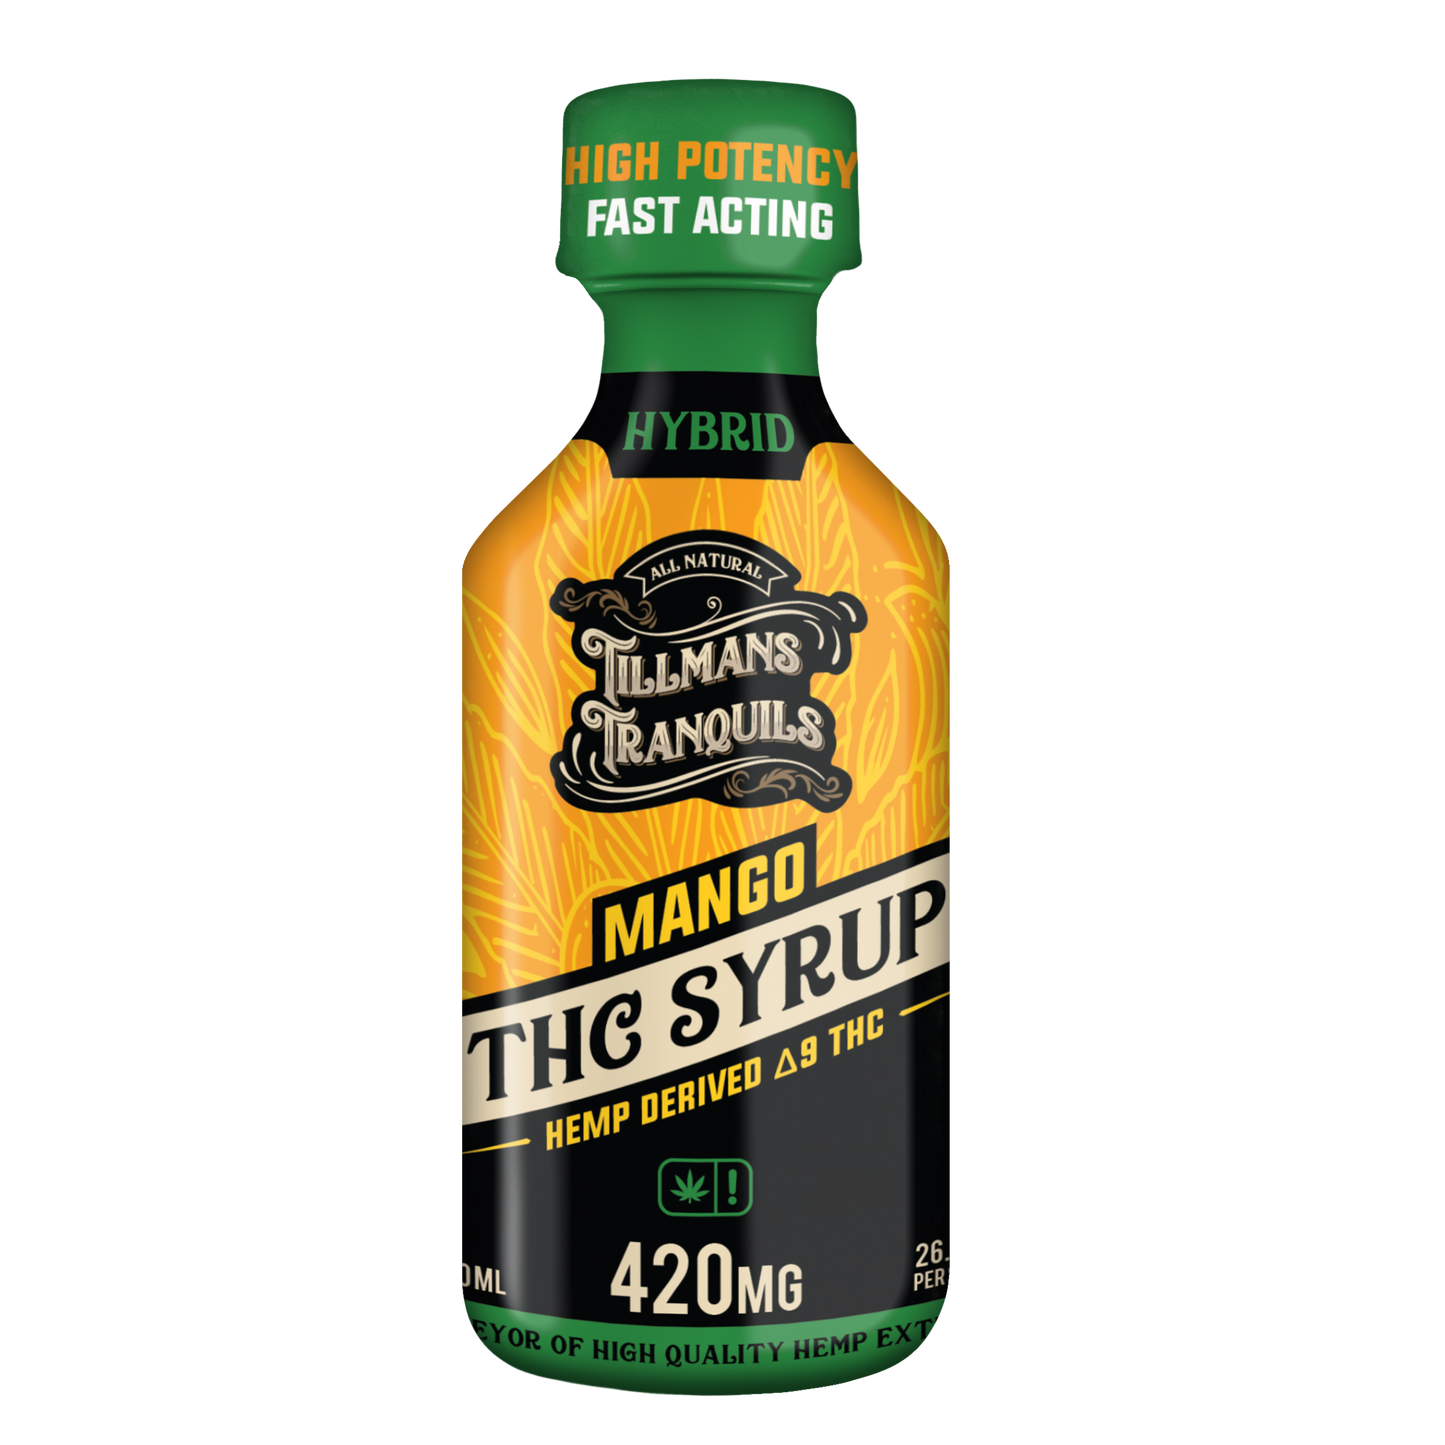 Tillmans Tranquils Mango Delta 9 THC Syrup – 420mg Best Sales Price - Edibles